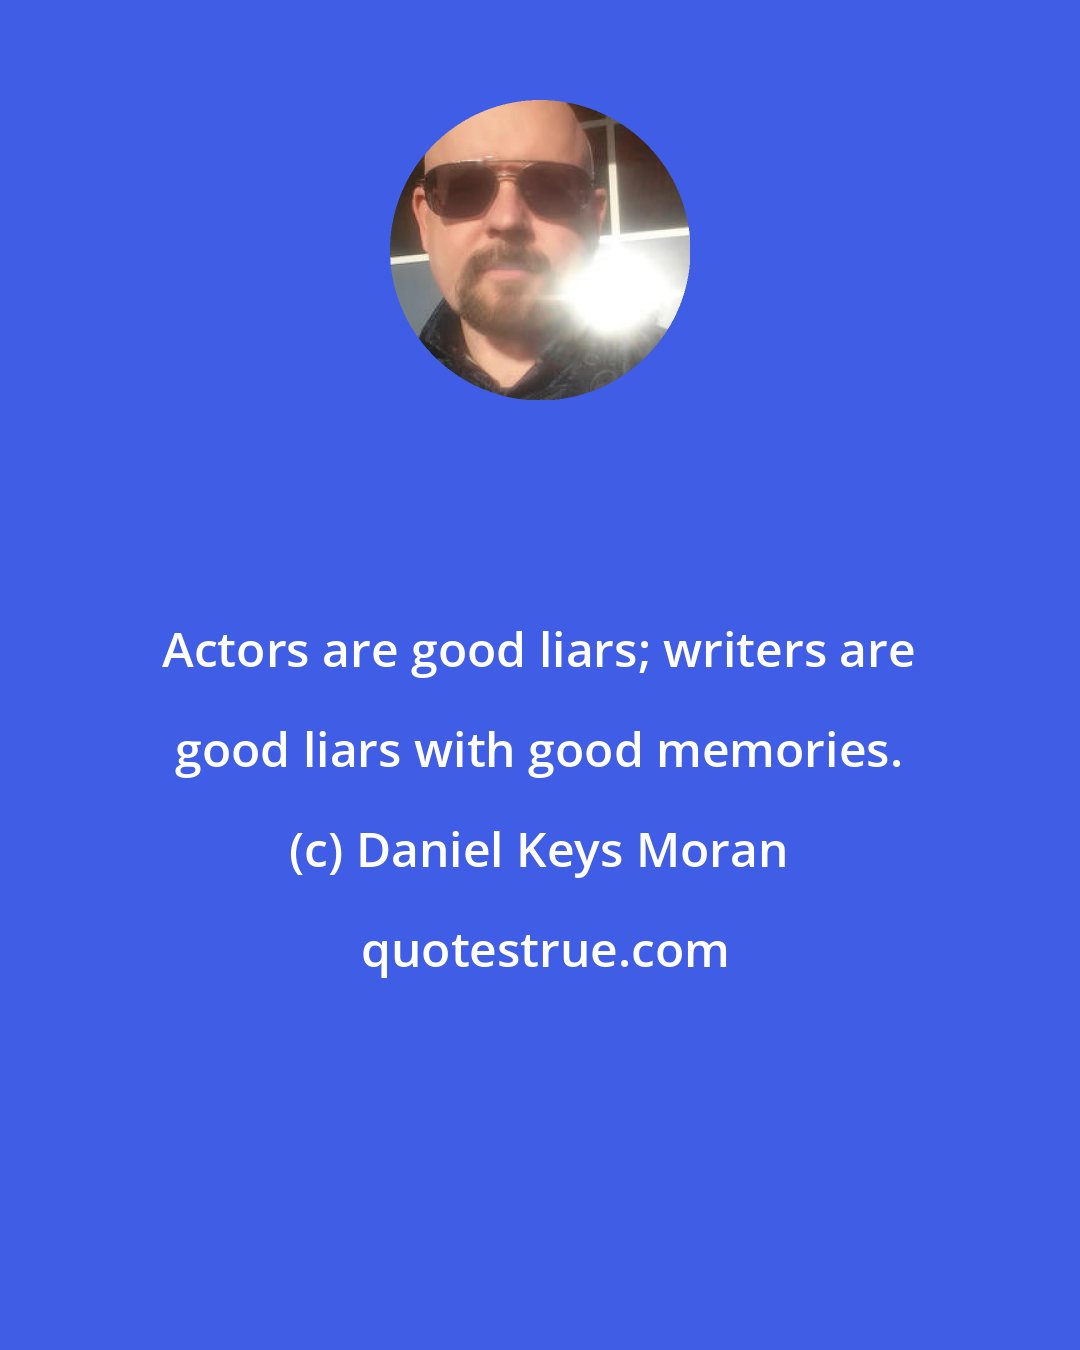 Daniel Keys Moran: Actors are good liars; writers are good liars with good memories.